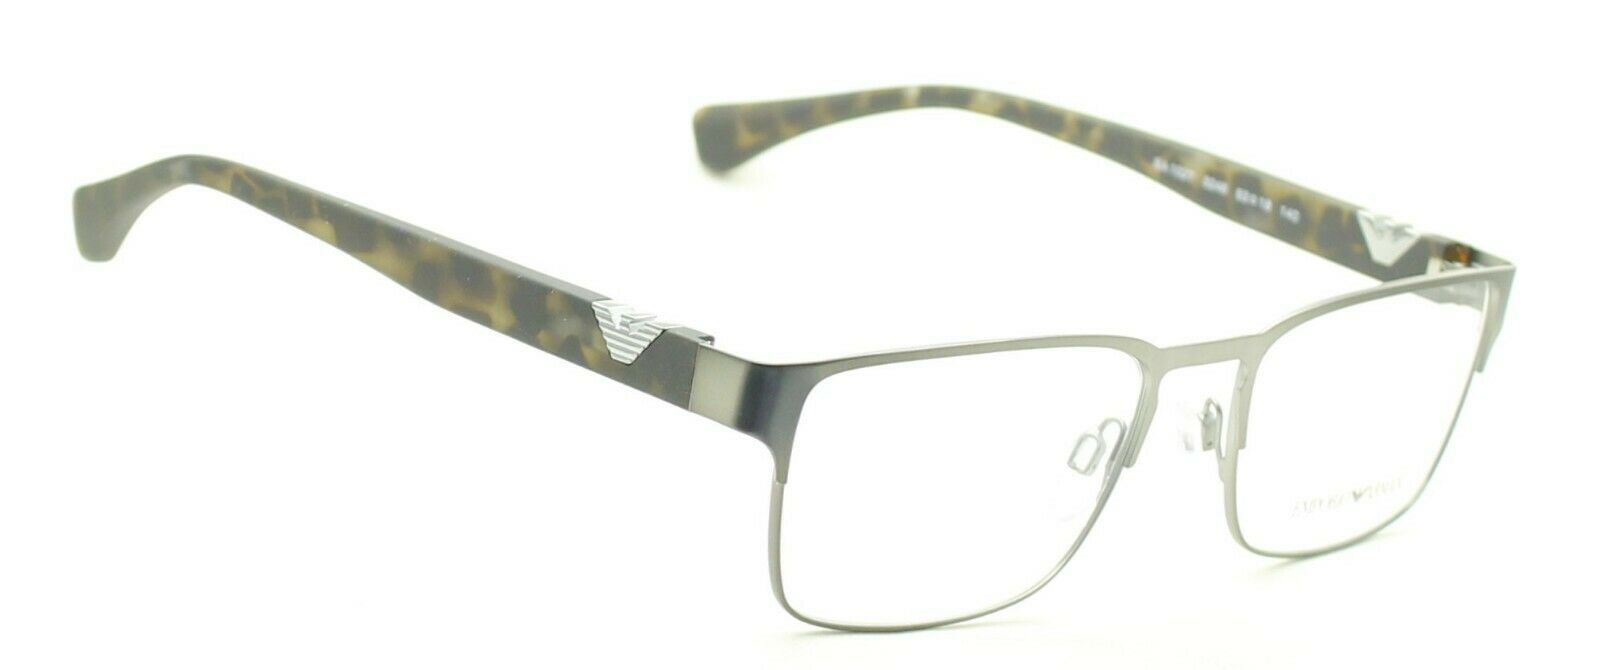 EMPORIO ARMANI EA1027 3246 53mm Eyewear FRAMES RX Optical Glasses Eyeglasses-New